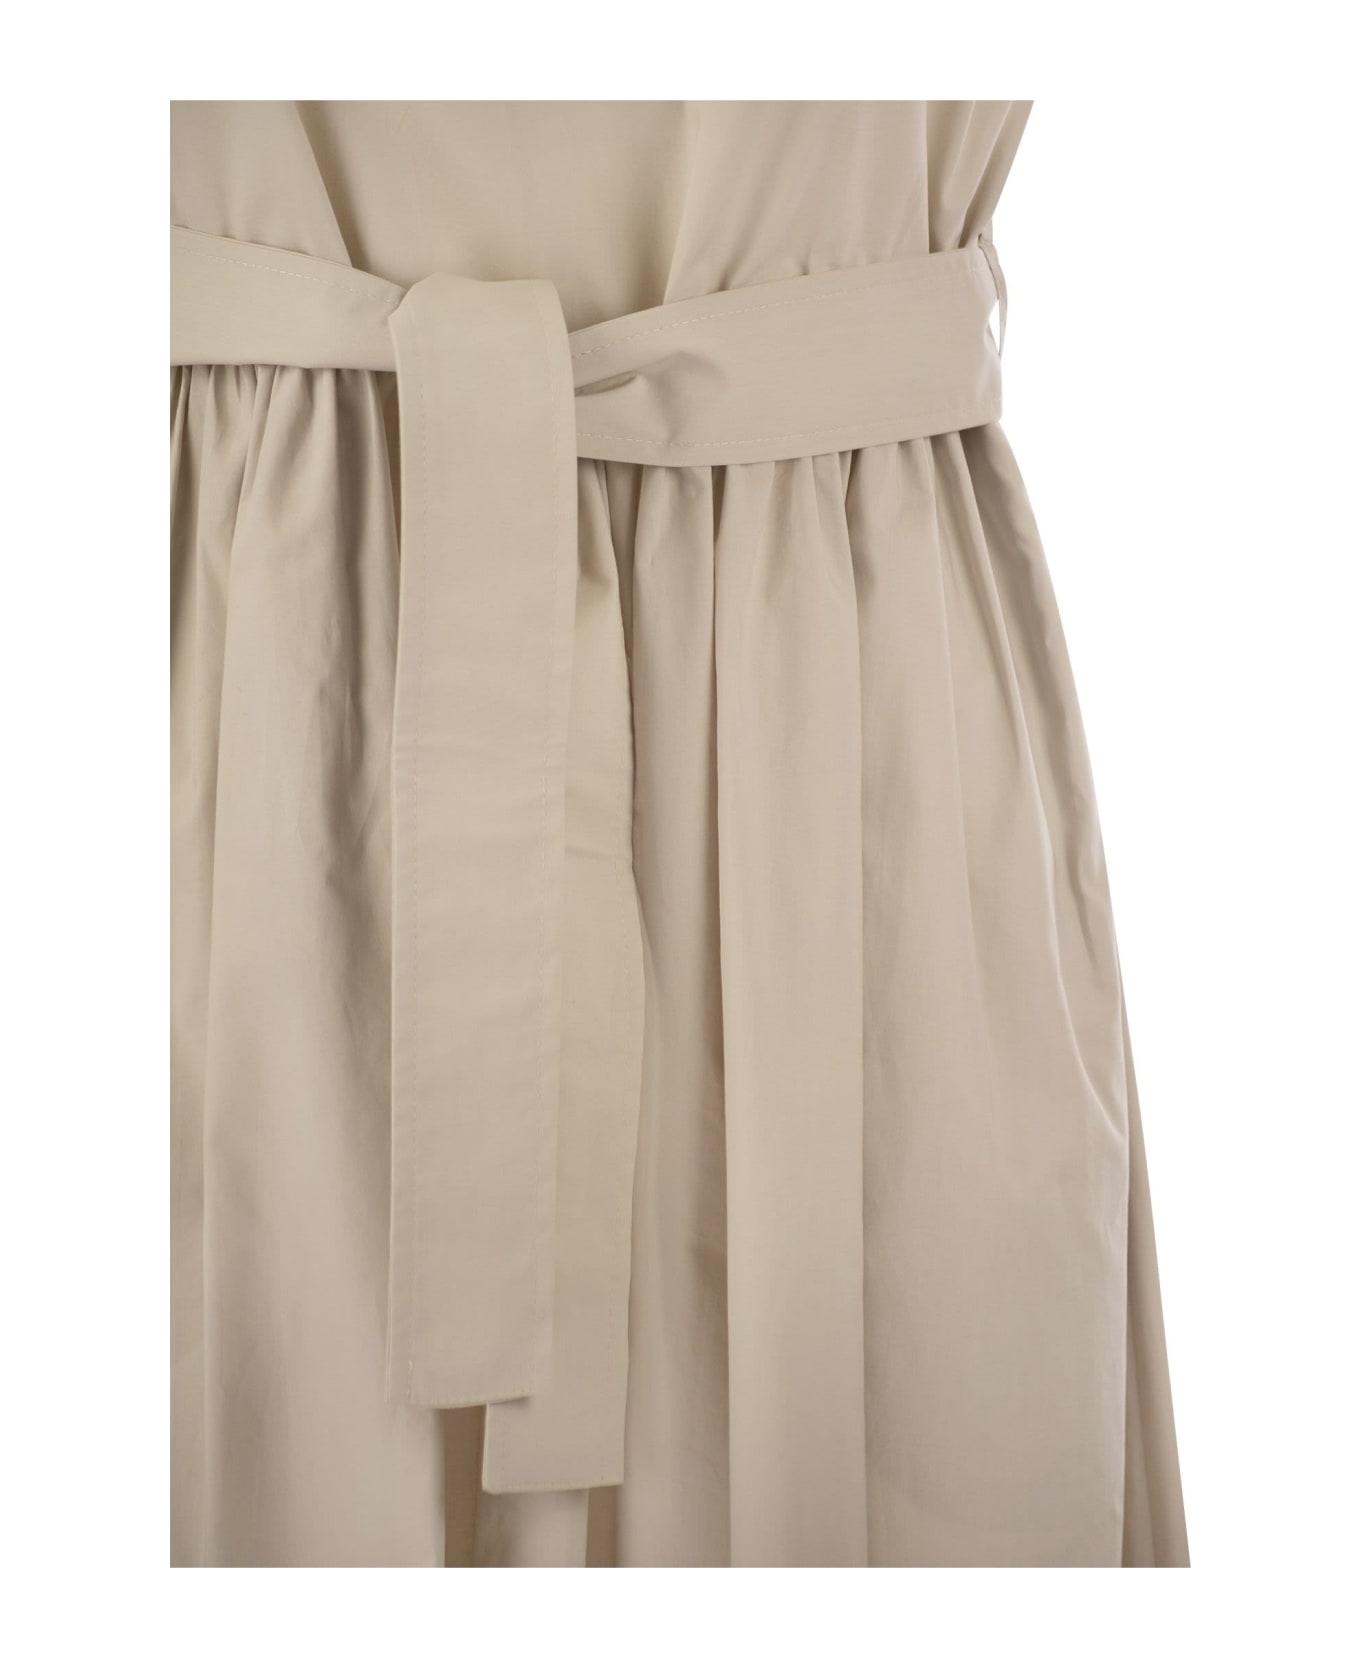 Woolrich Belted Short-sleeved Dress - Sand